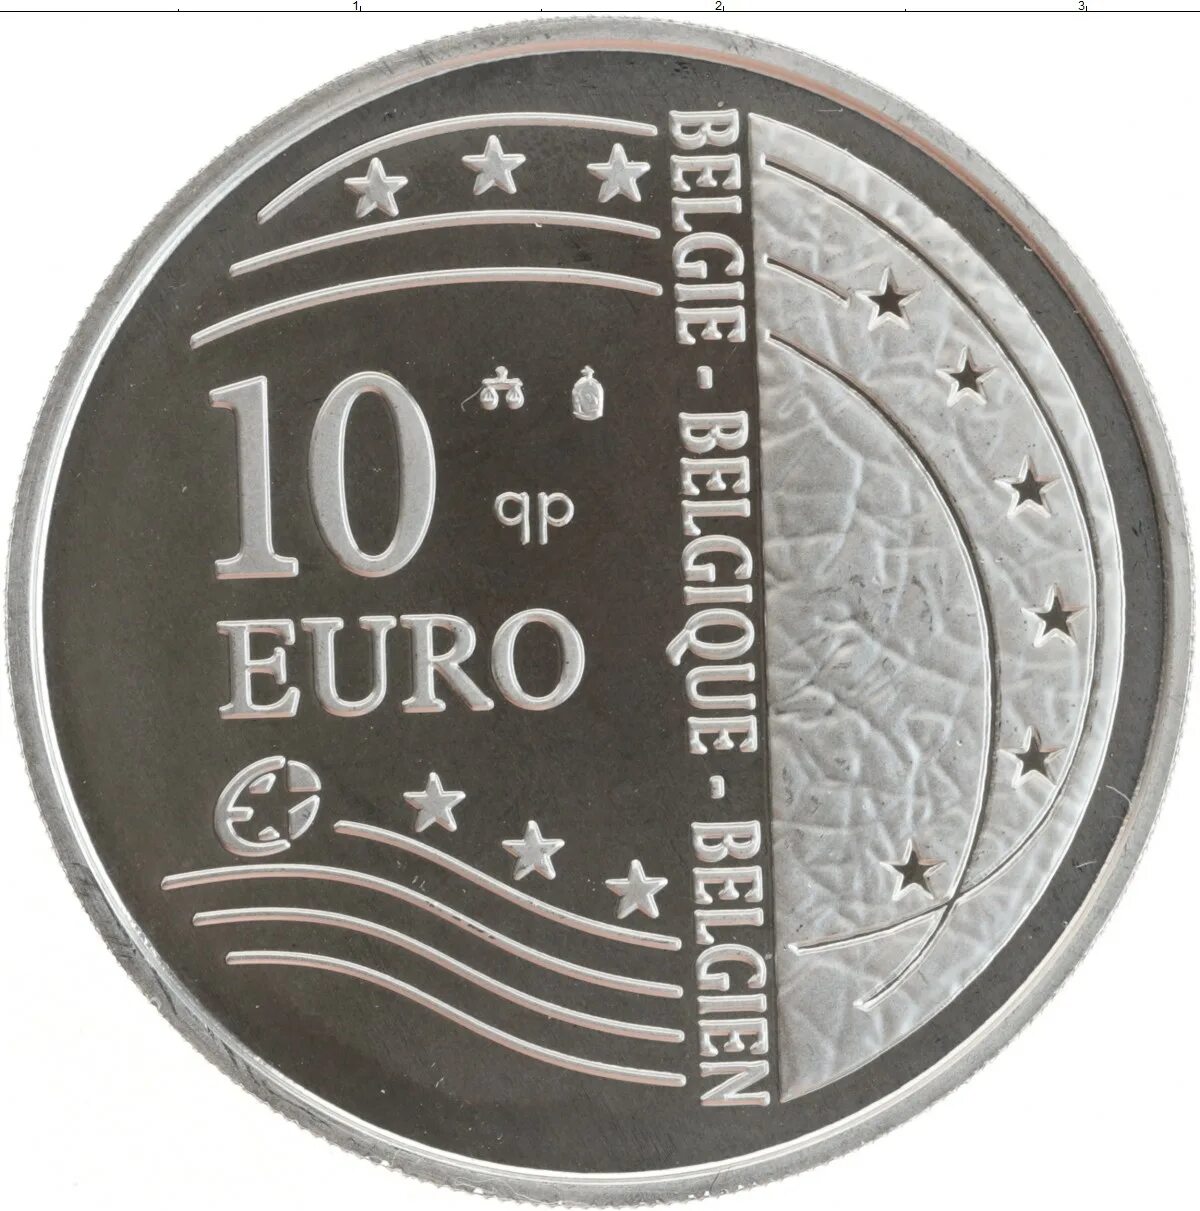 Купить евро стим. 10 Евро серебро. Литва 10 евро серебро. Монета шоколадная 2 евро серебро.